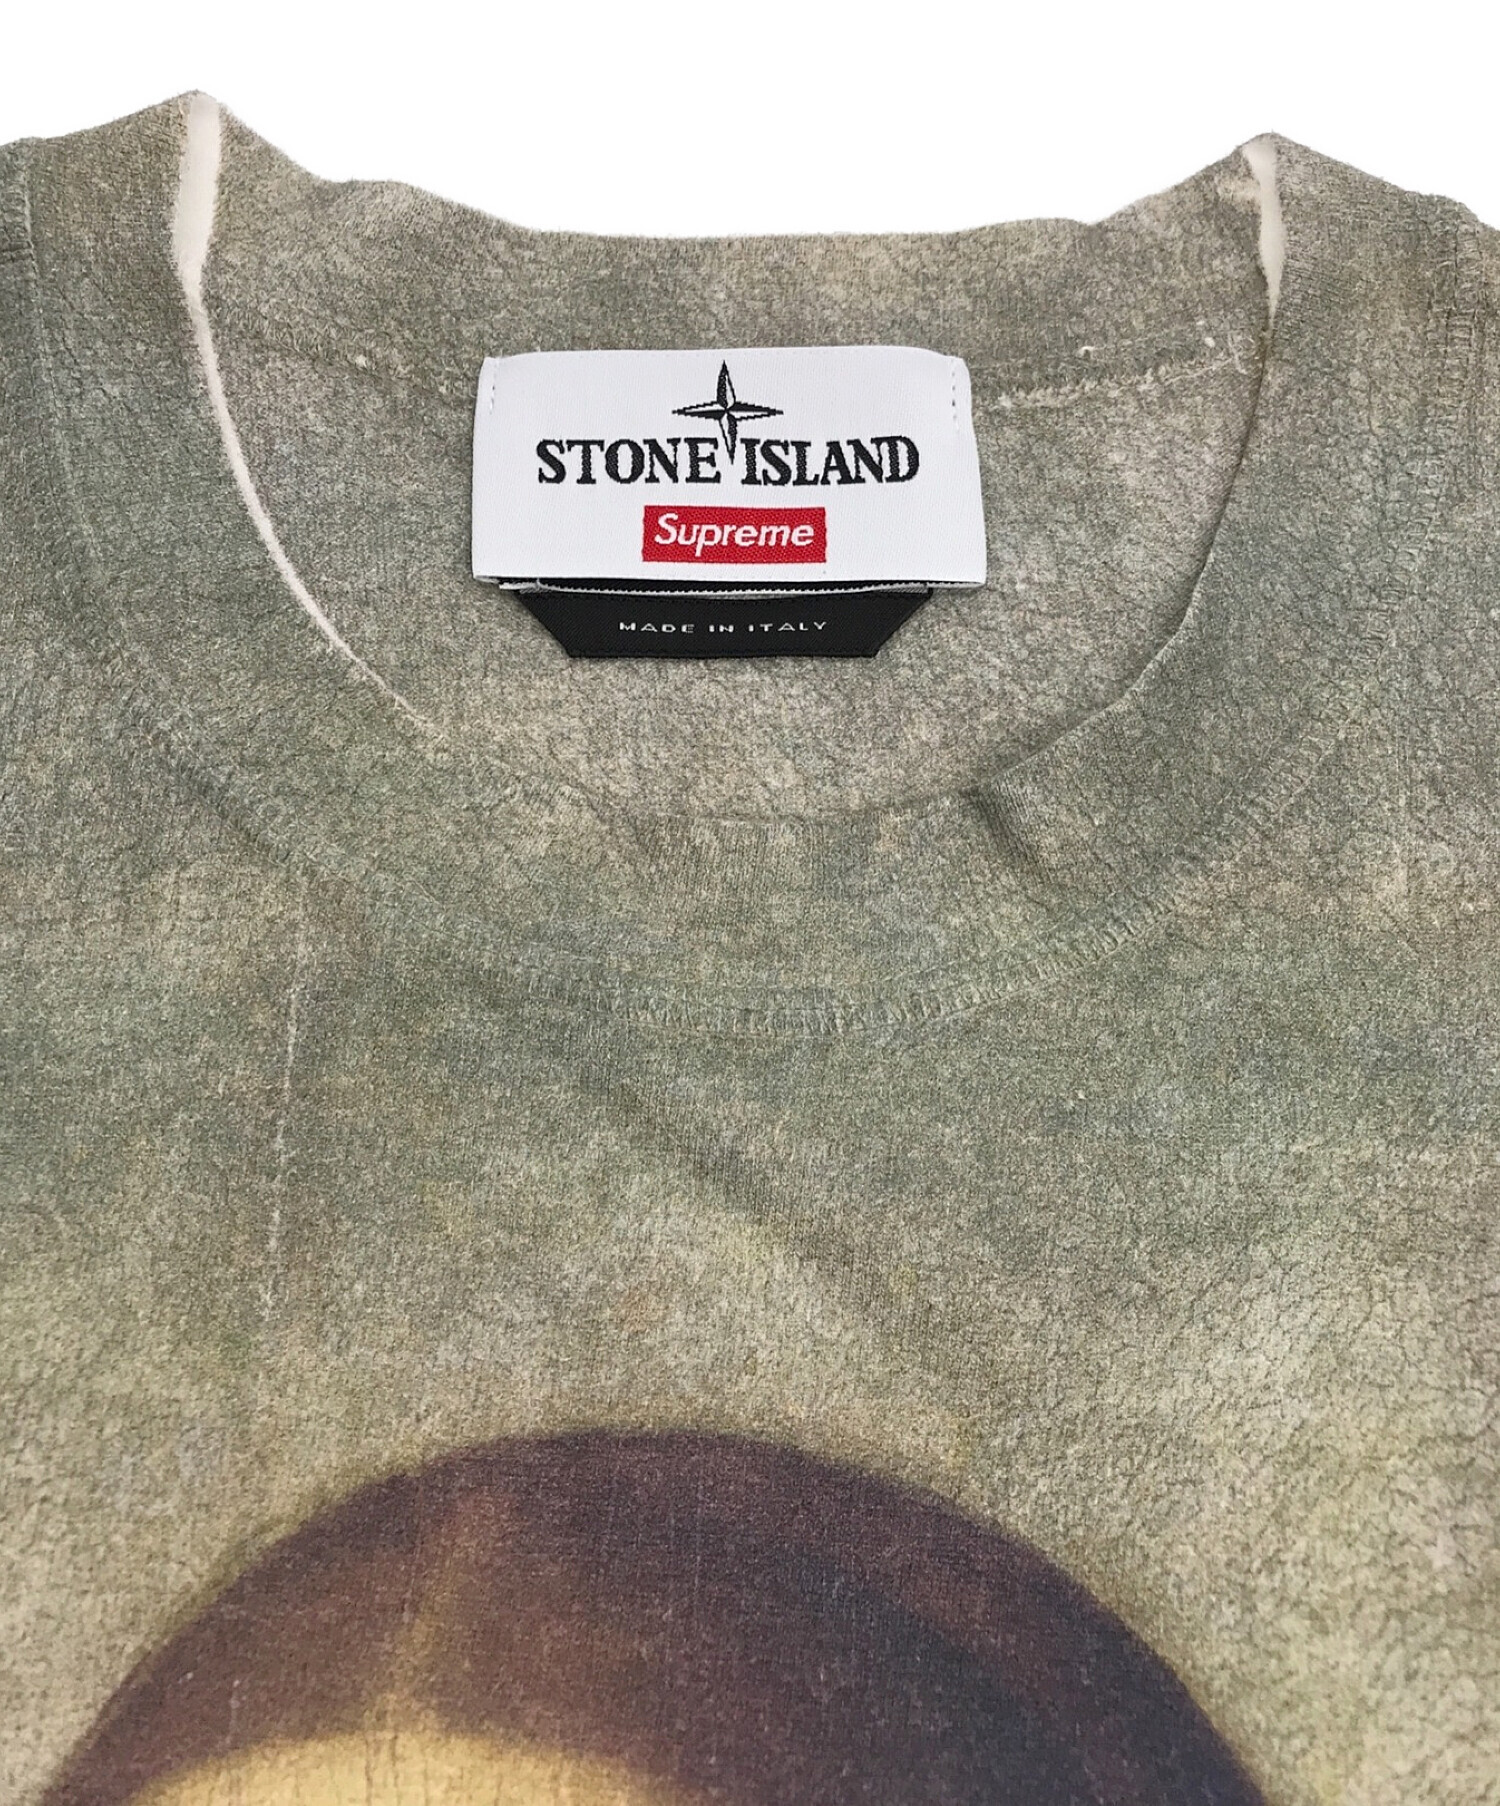 supreme×stone island (シュプリーム×ストーンアイランド) S/S Top Mona Lisa オリーブ×ホワイト サイズ:M